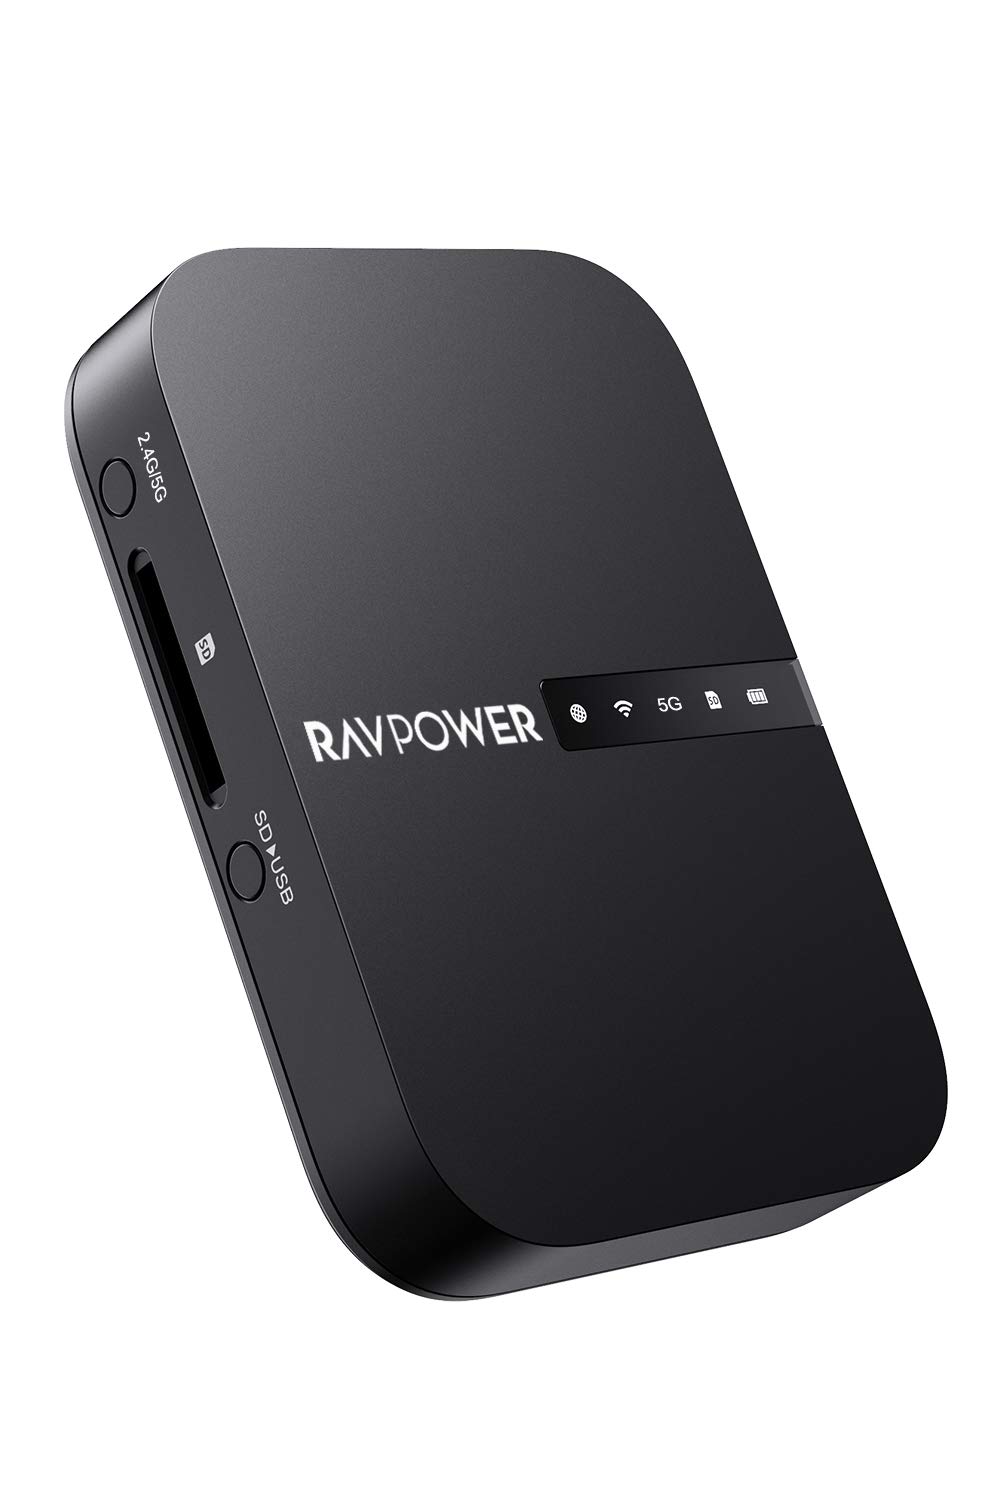 FileHub RP-WD009 | RAVPower Japan RAVPower 多機能型ワイヤレス ...